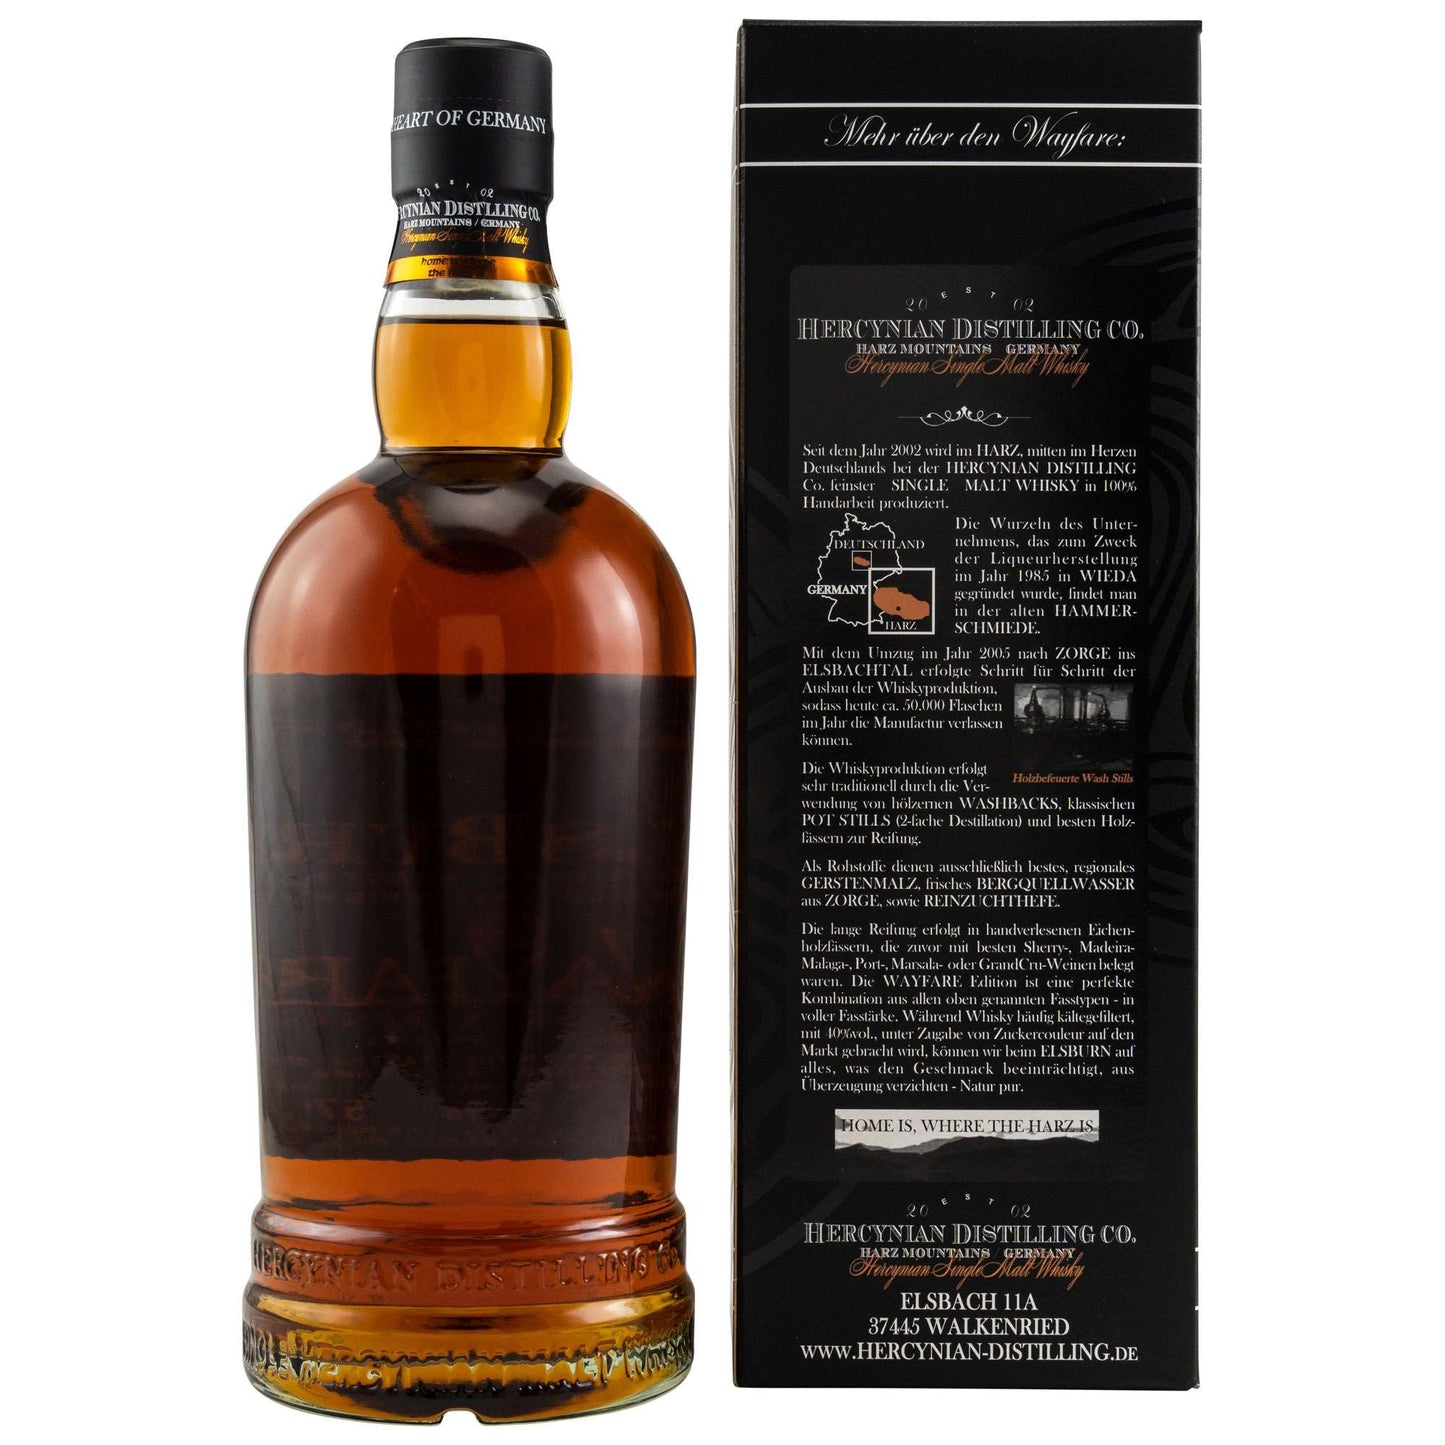 ElsBurn | Wayfare | Batch 001 | 2020 | The Original Hercynian German Whisky | 0,7l | 57,7%GET A BOTTLE